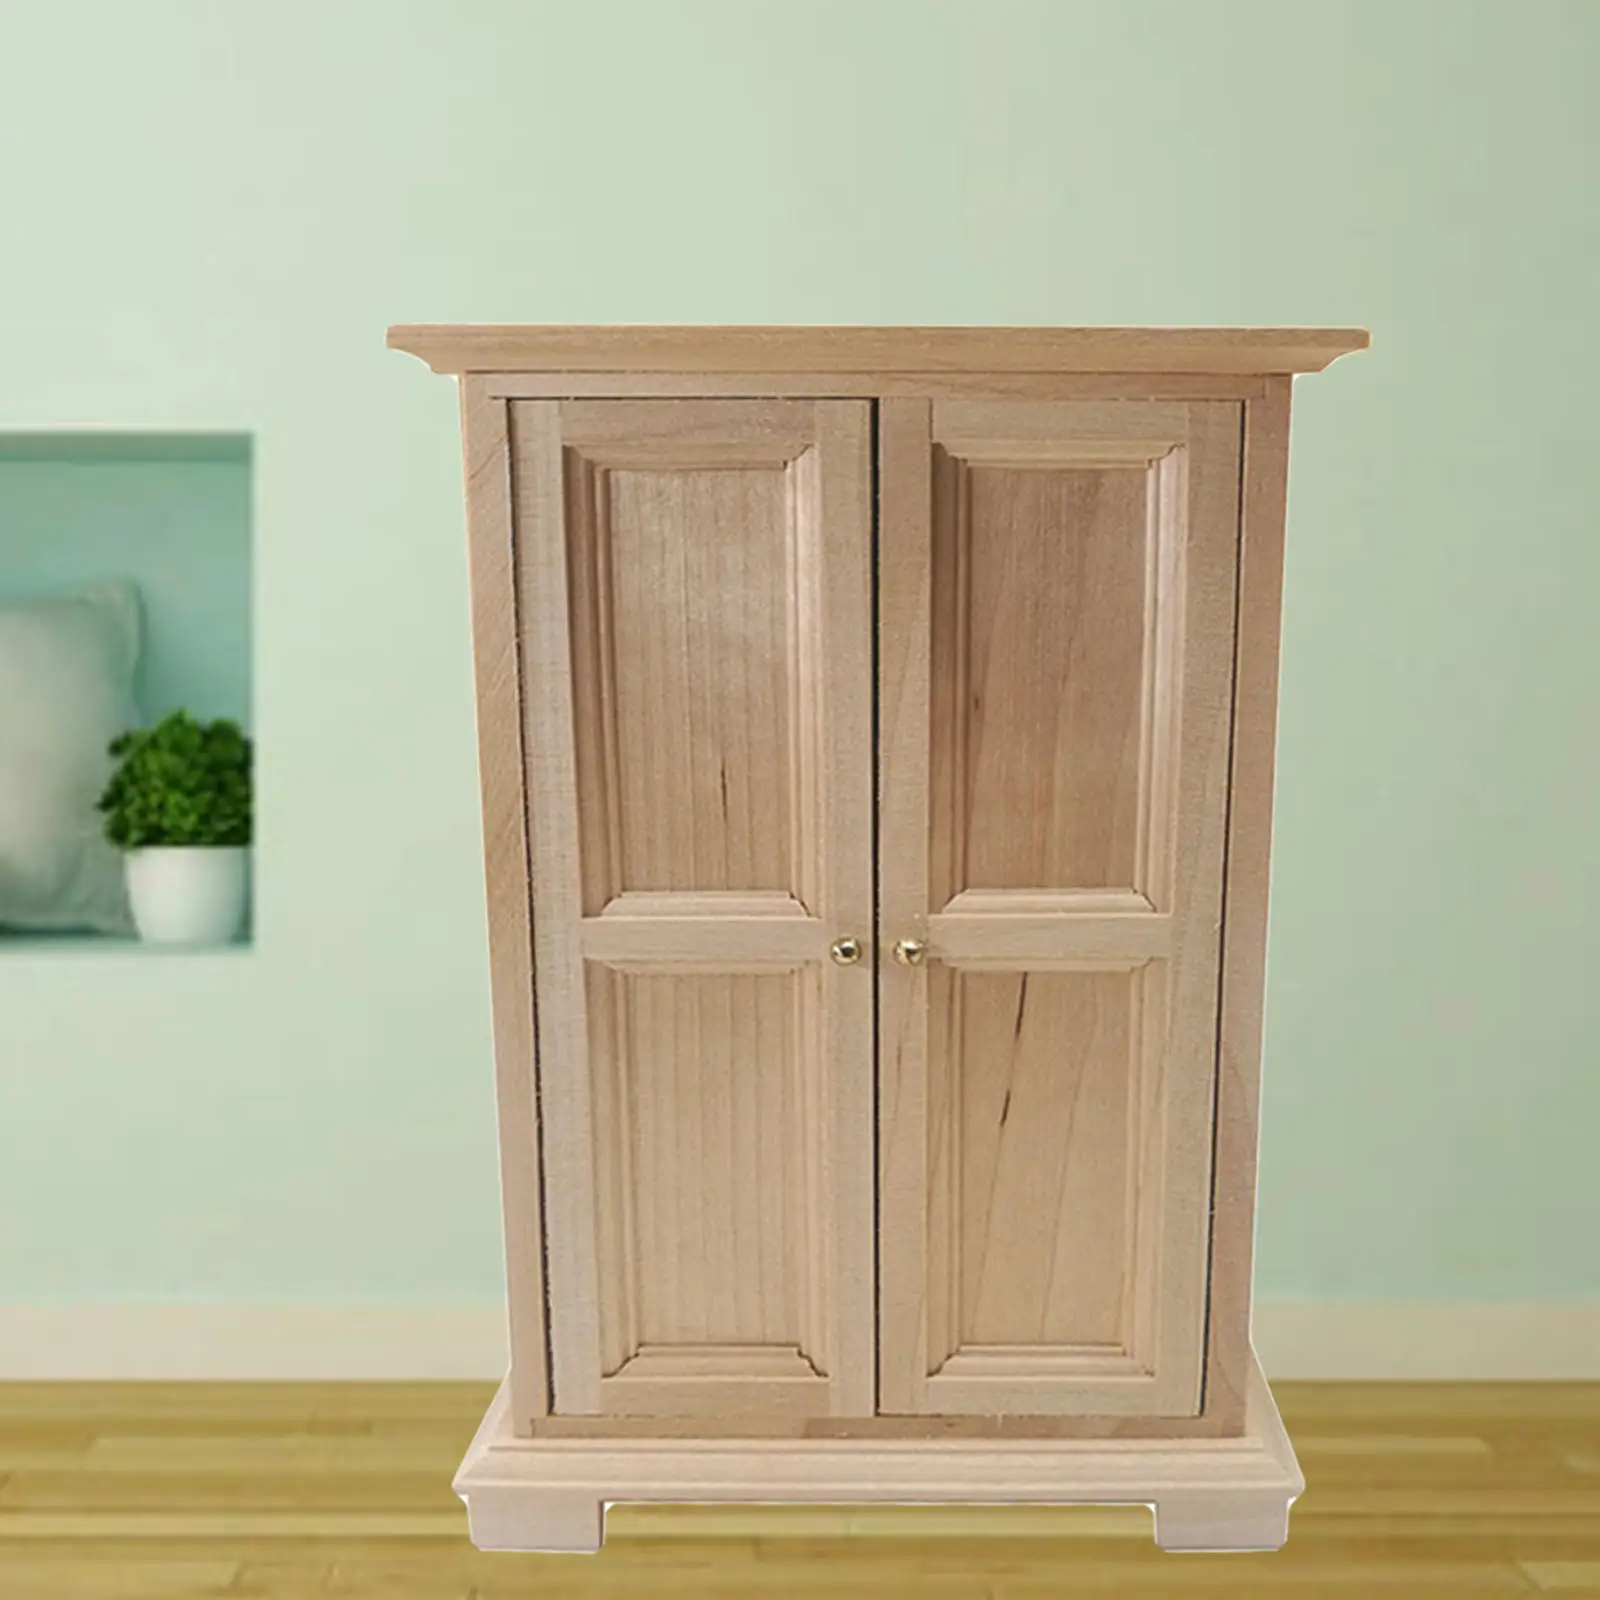 1:12 Miniature Dollhouse Wooden Wardrobe Vintage Double Door Closet for Landscape Home Bedroom